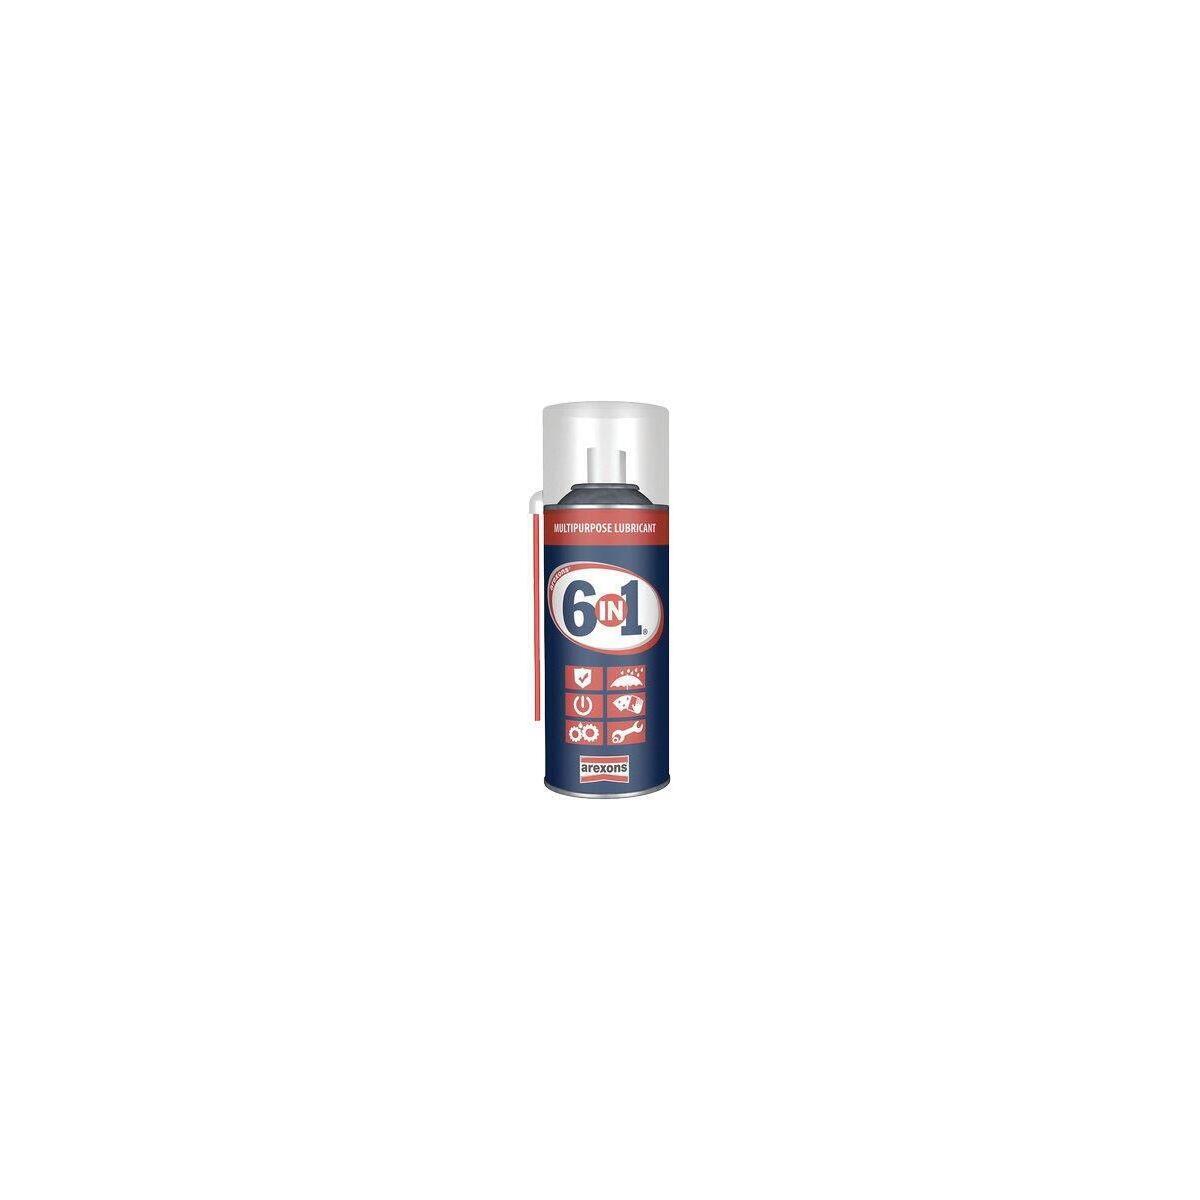 Lubrificante spray svitol 6 in 1 arexons - Ml 400 8390453